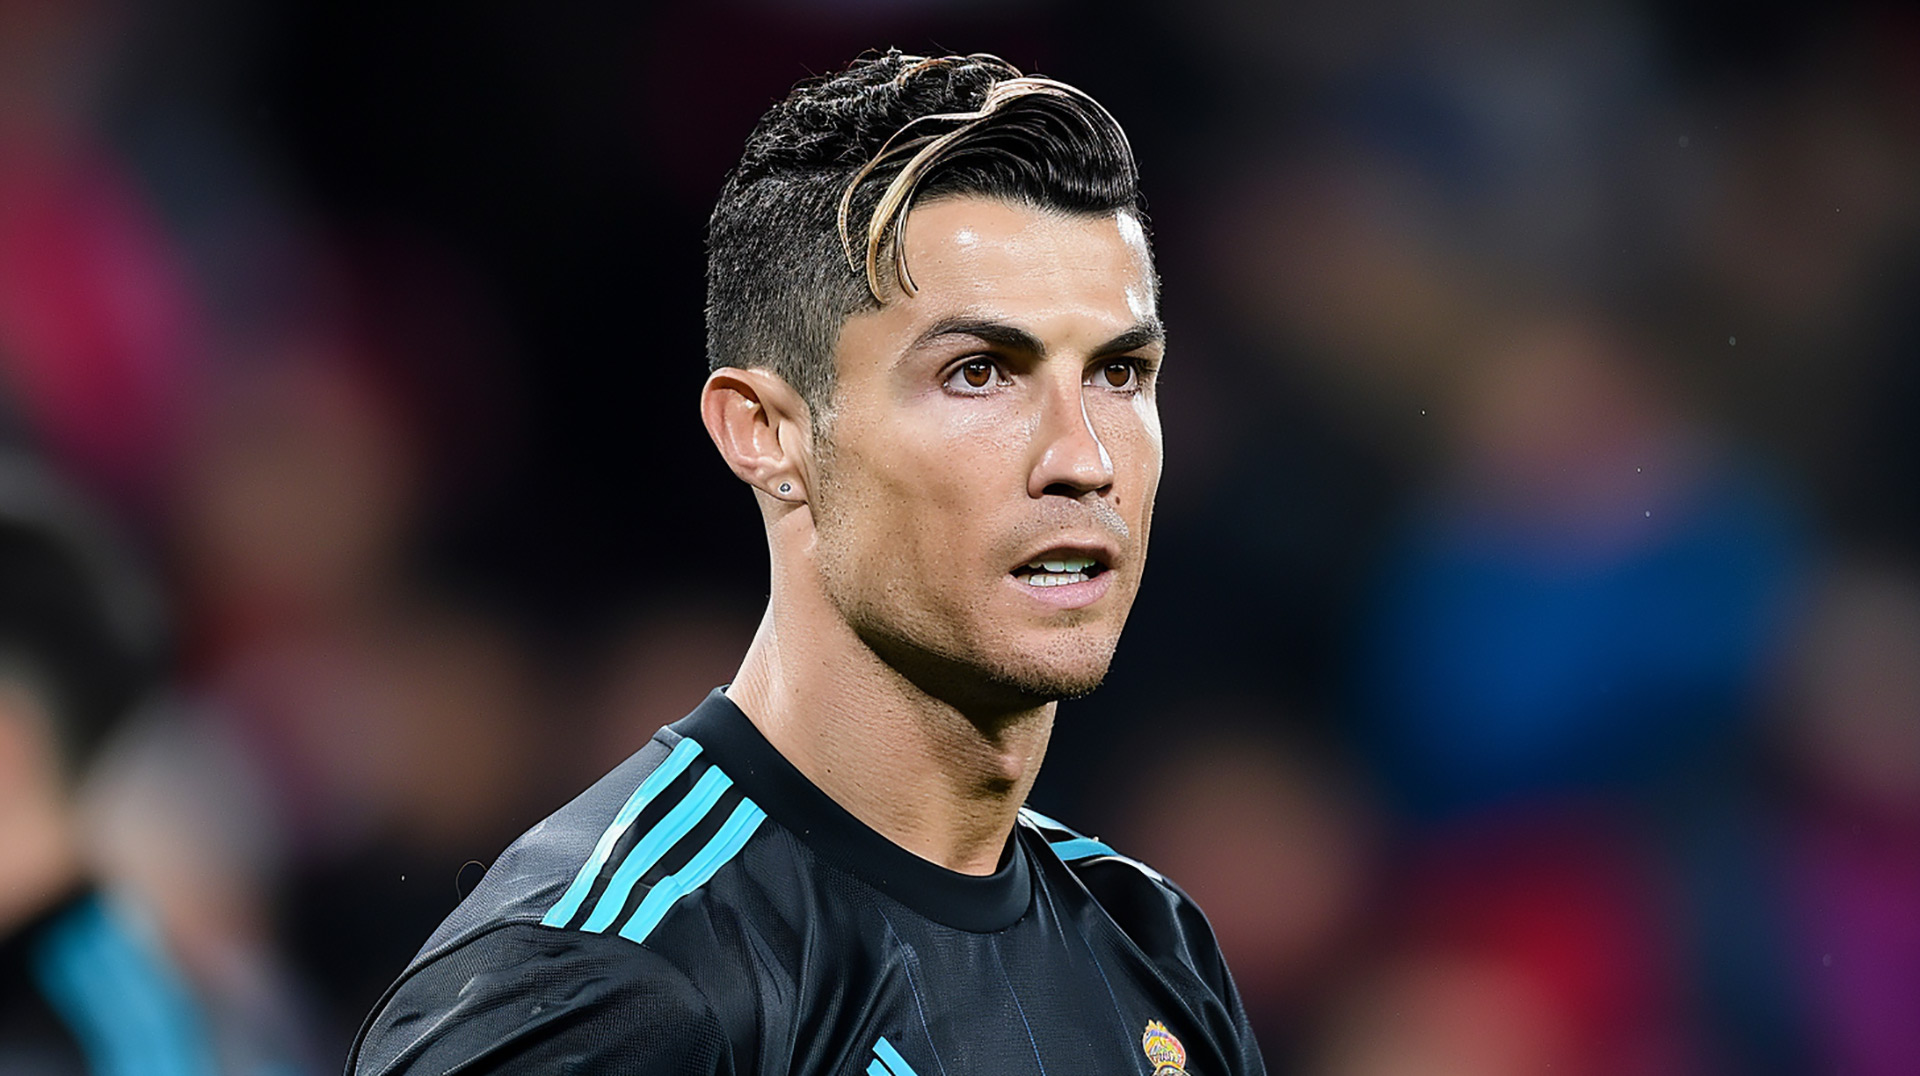 Stunning Ronaldo Real Madrid Desktop Backgrounds in 4K